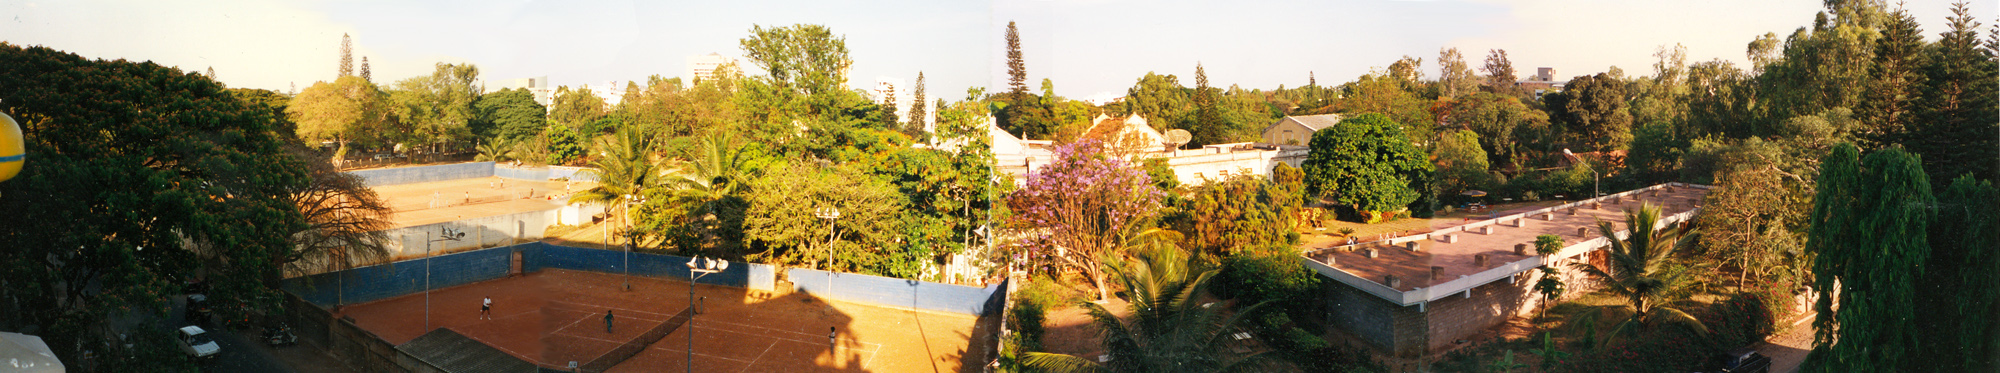 Hotel Rama, Lavelle Road, Bangalore: vista from rear ca. 1990